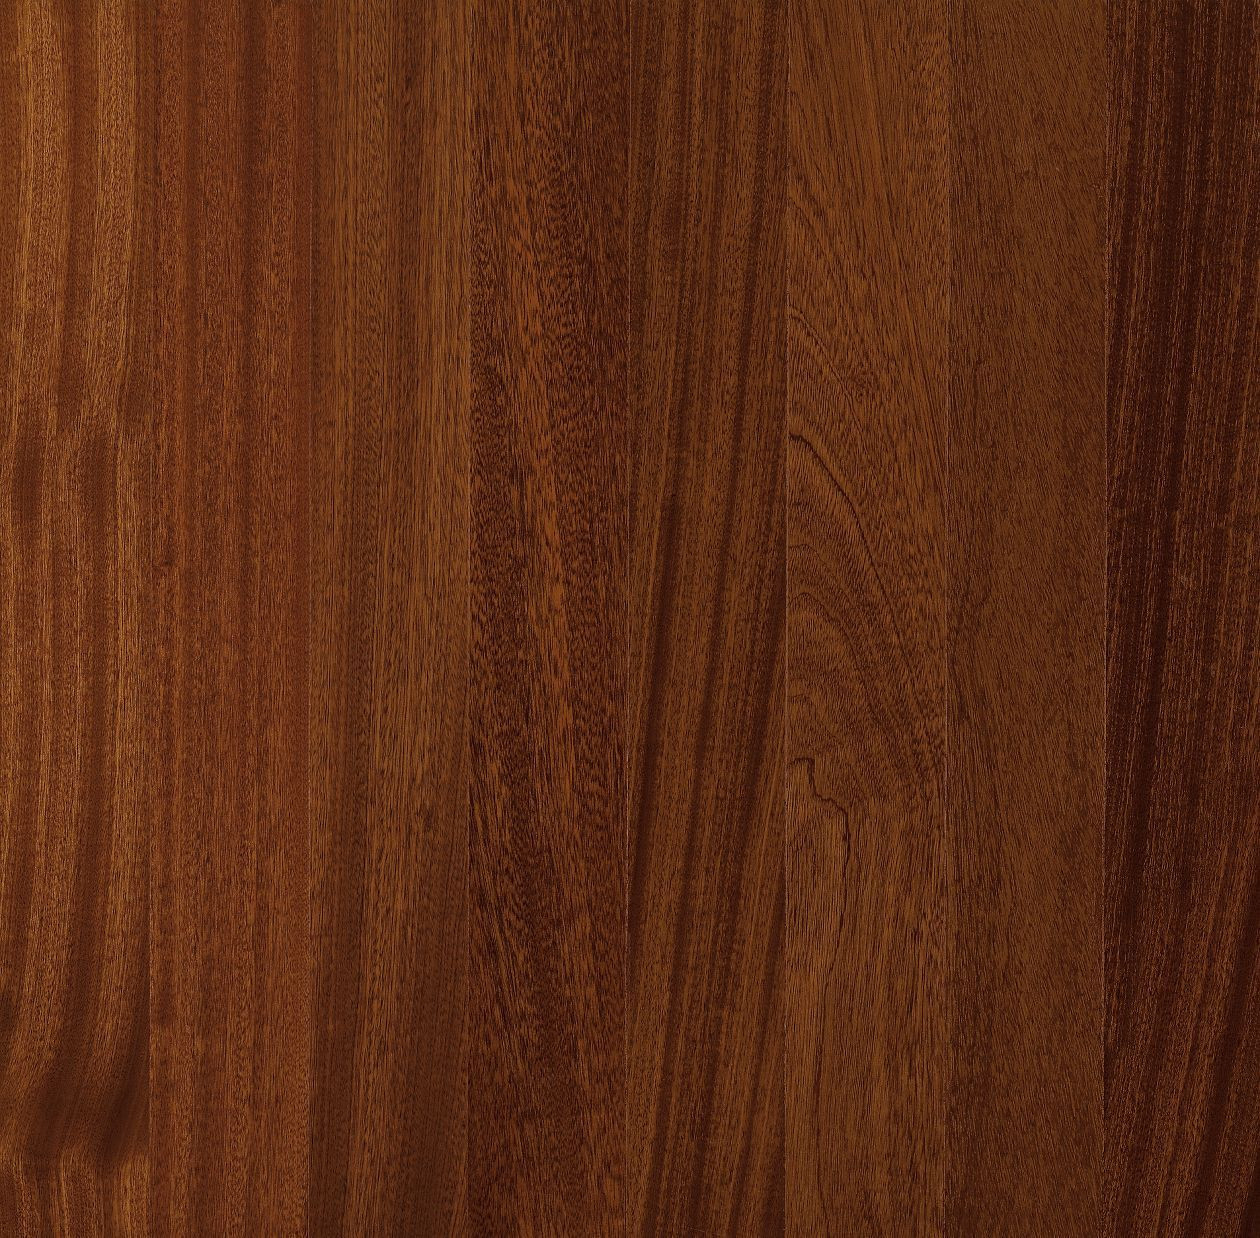 engineered hardwood flooring manufacturers usa of african mahogany african mahogany natural ege3204 hardwood intended for african mahogany african mahogany natural ege3204 hardwood